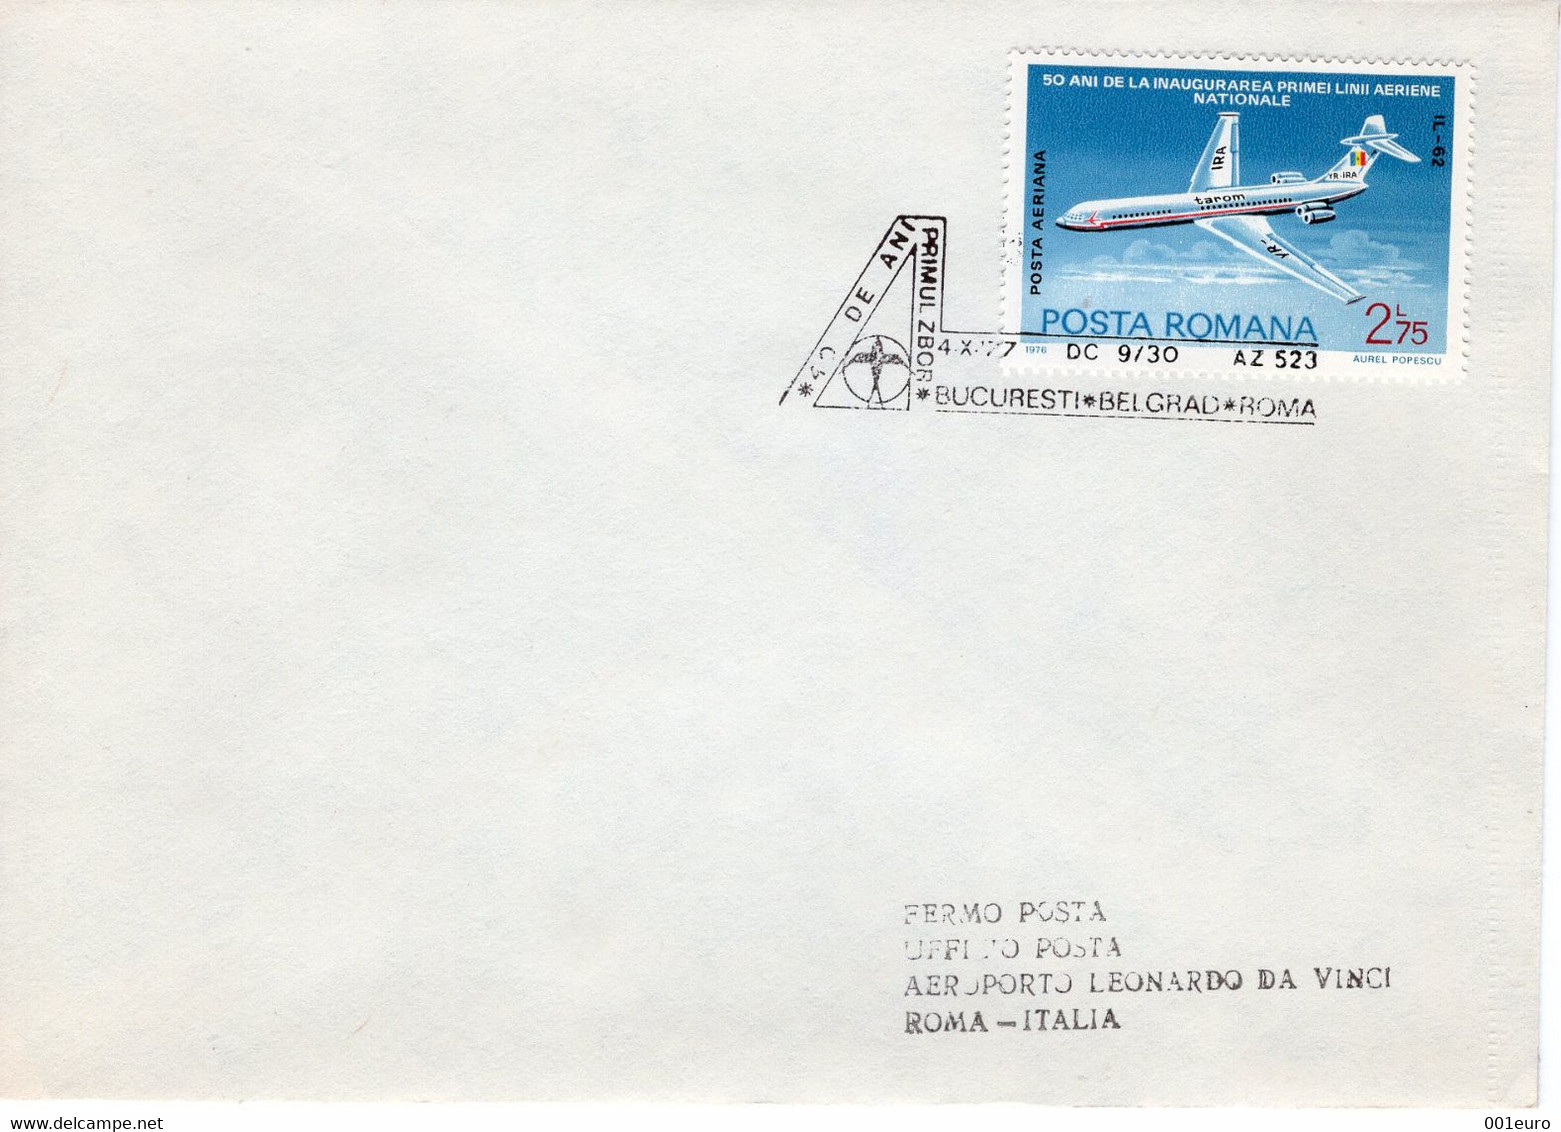 ROMANIA 1977: AEROPHILATELY, FLIGHT BUCHAREST - BELGRADE - ROME, Illustrated Postmark On Cover  - Registered Shipping! - Postmark Collection